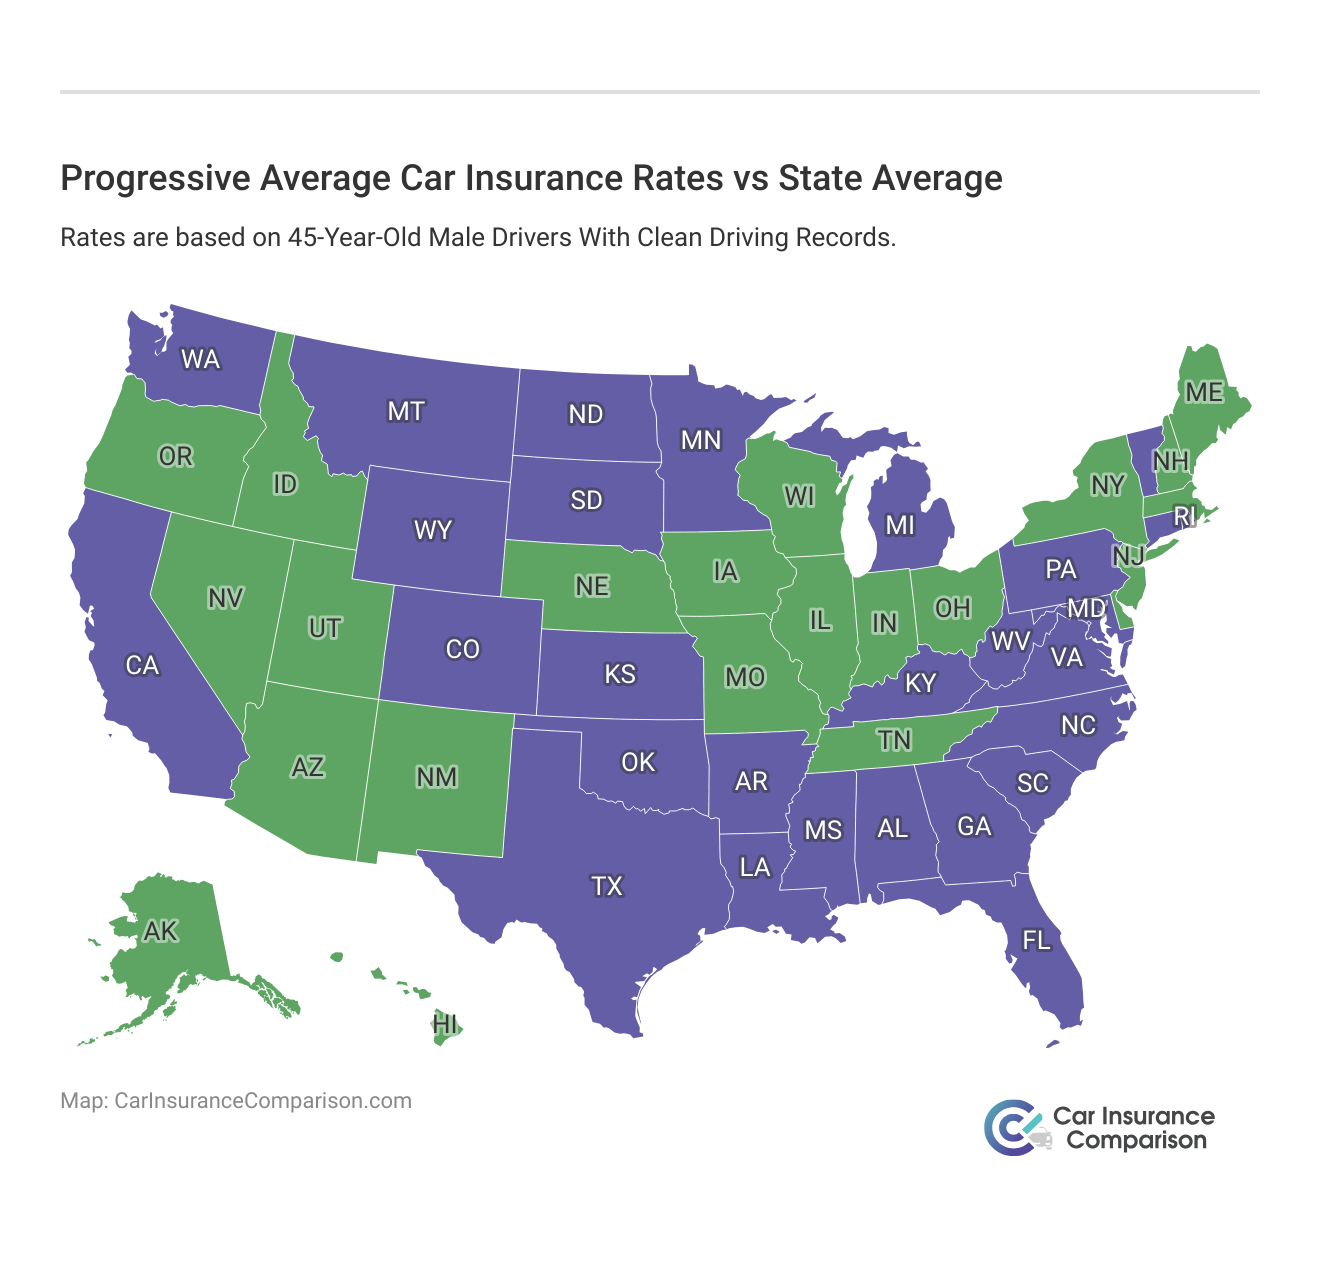 <h3>Progressive Average Car Insurance Rates vs State Average</h3>